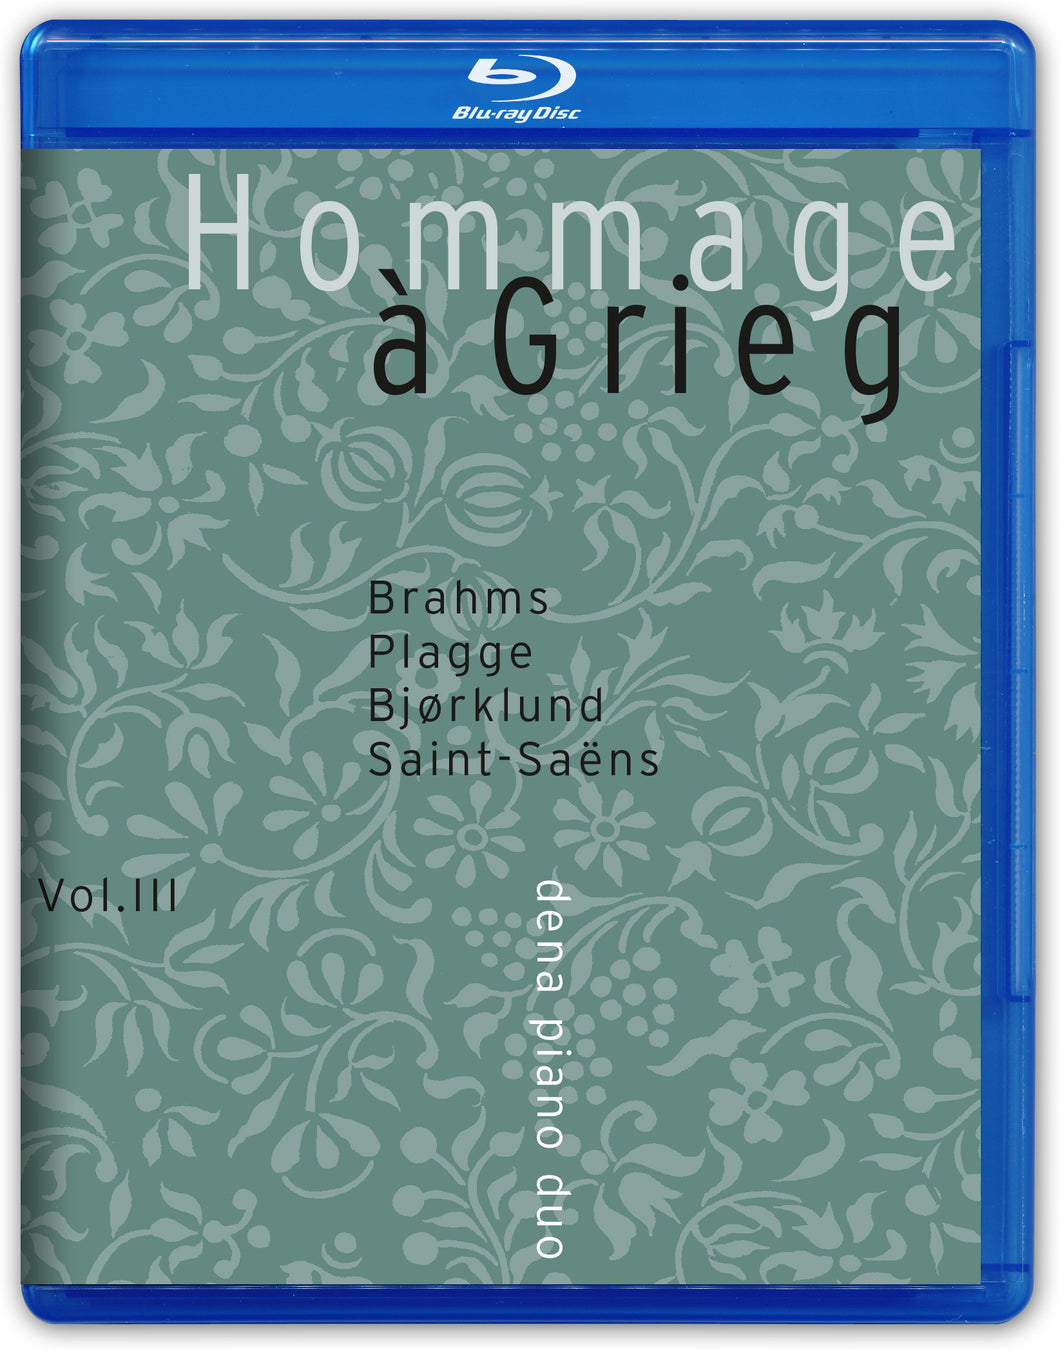 Hommage à Grieg vol III - dena piano duo